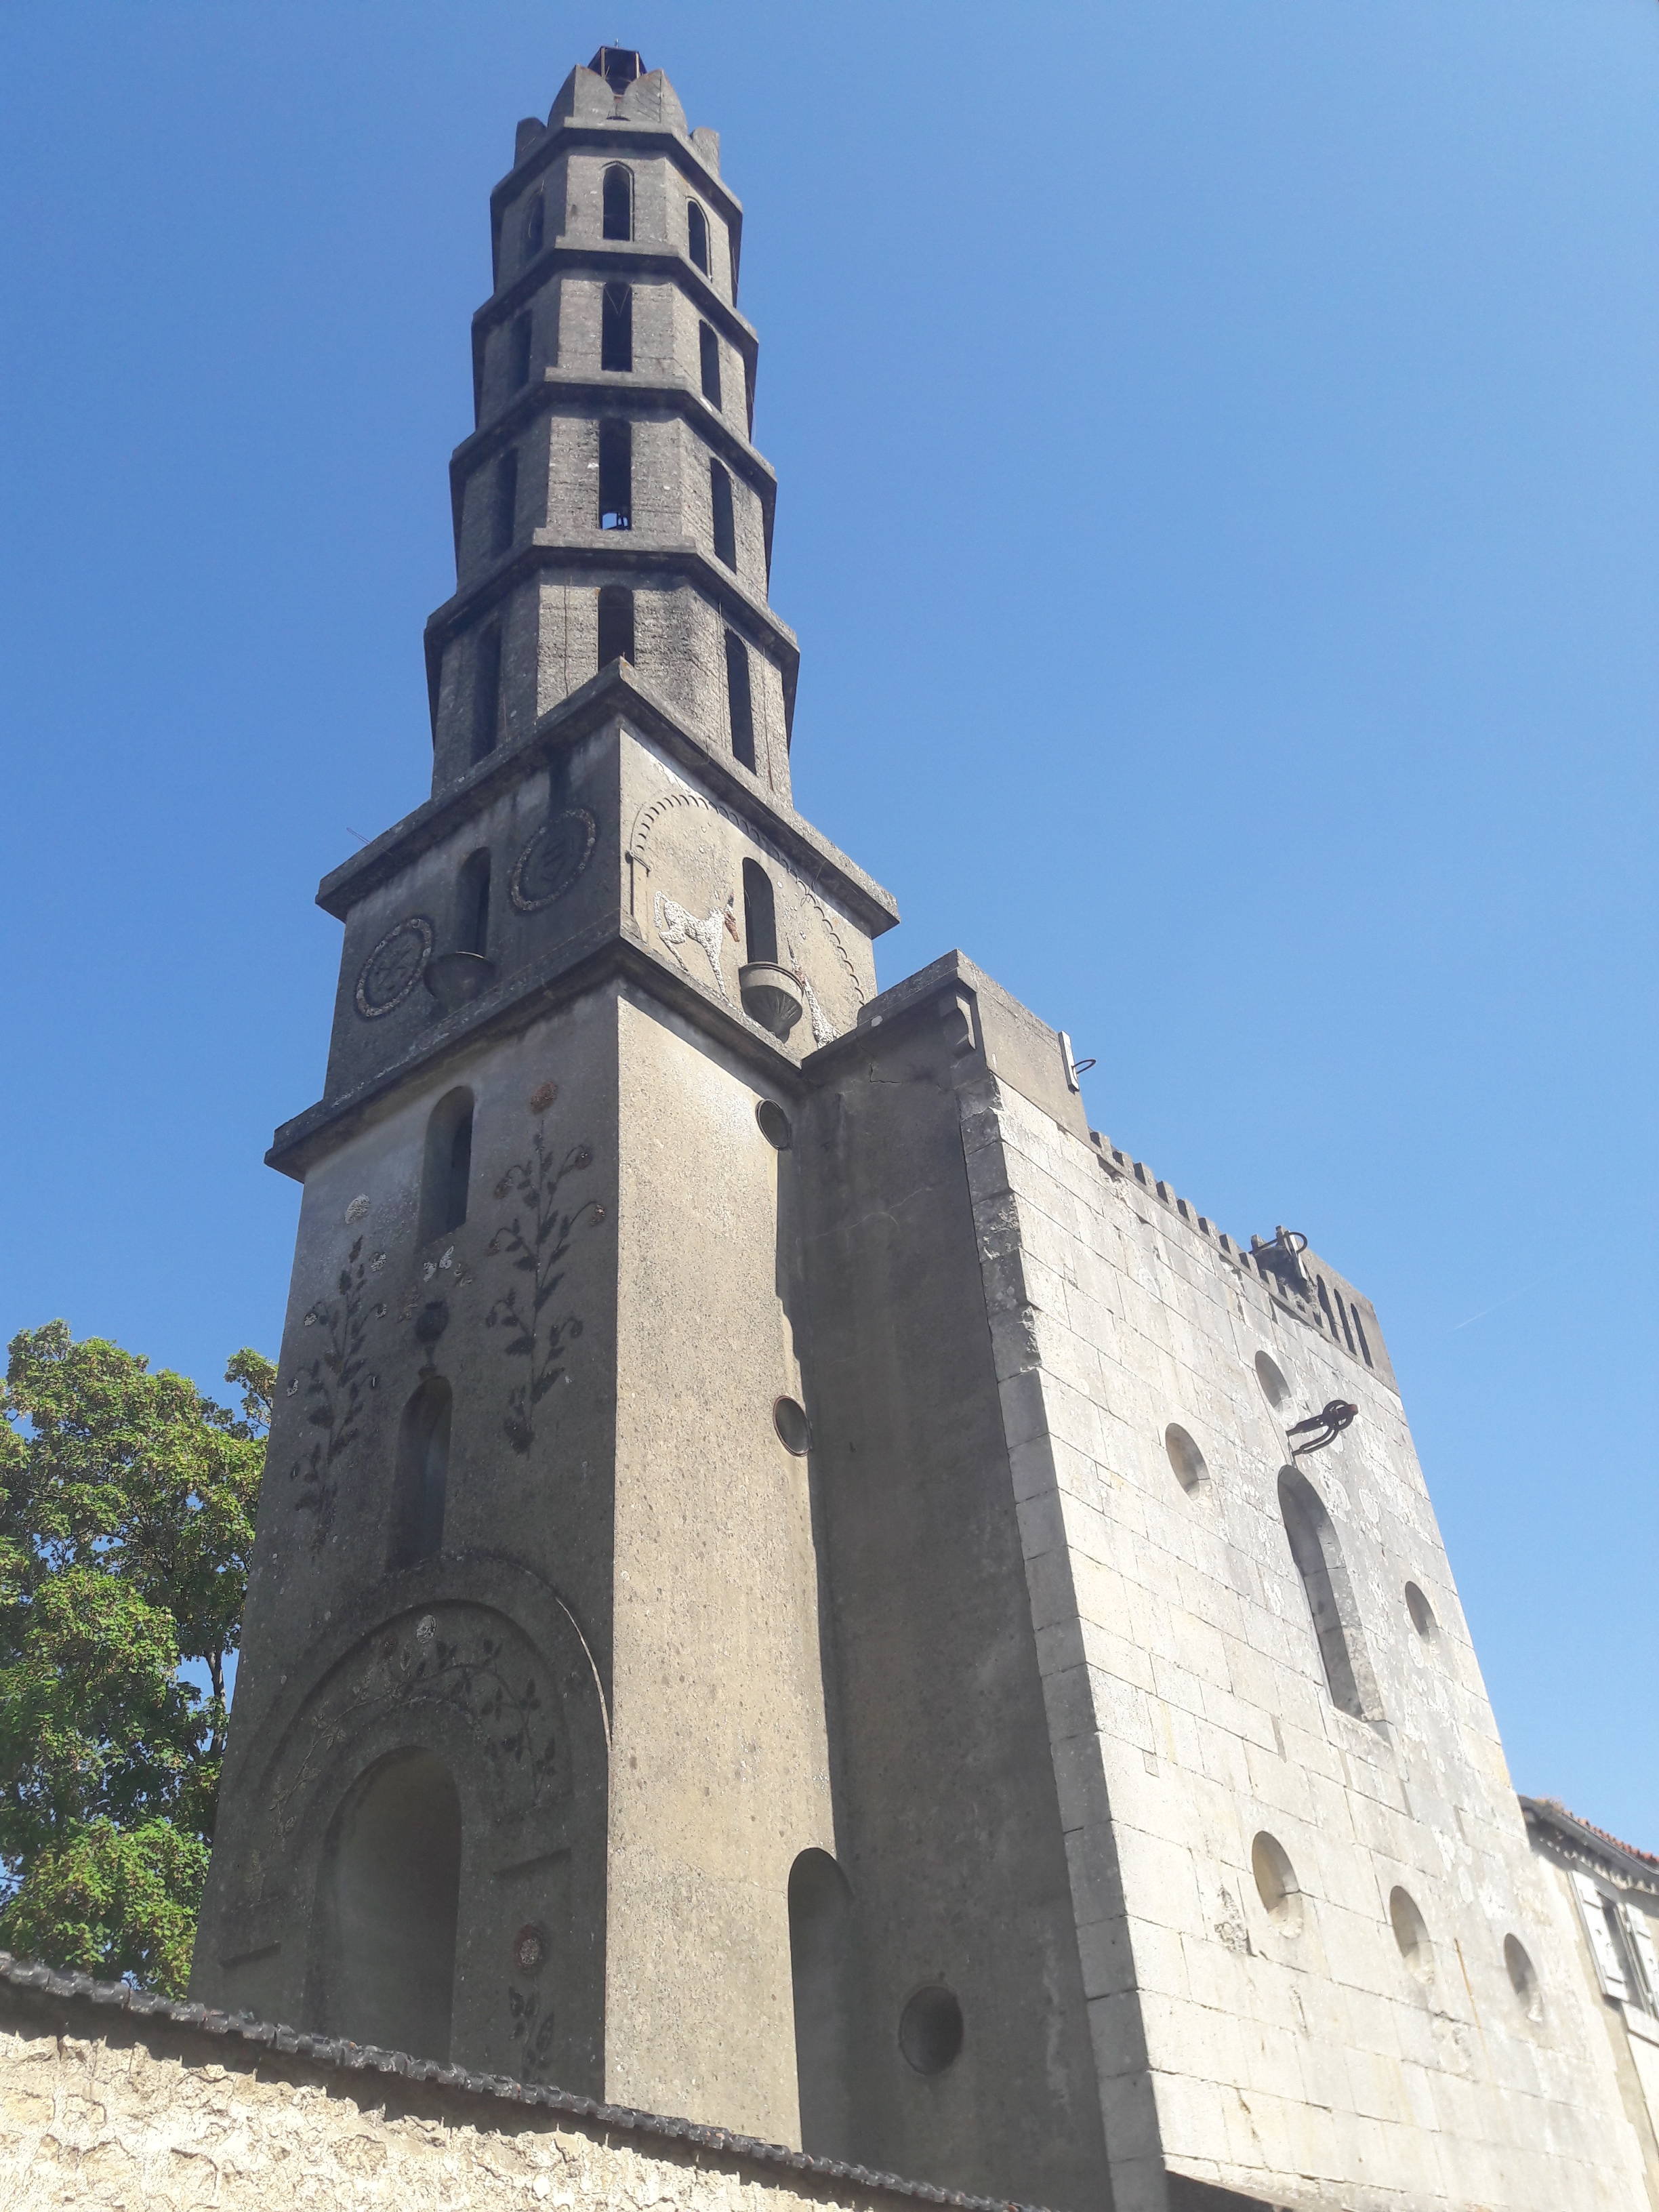 The Rivalland Tower in Fontenay le Comte in the Marais poitevin regional nature park.